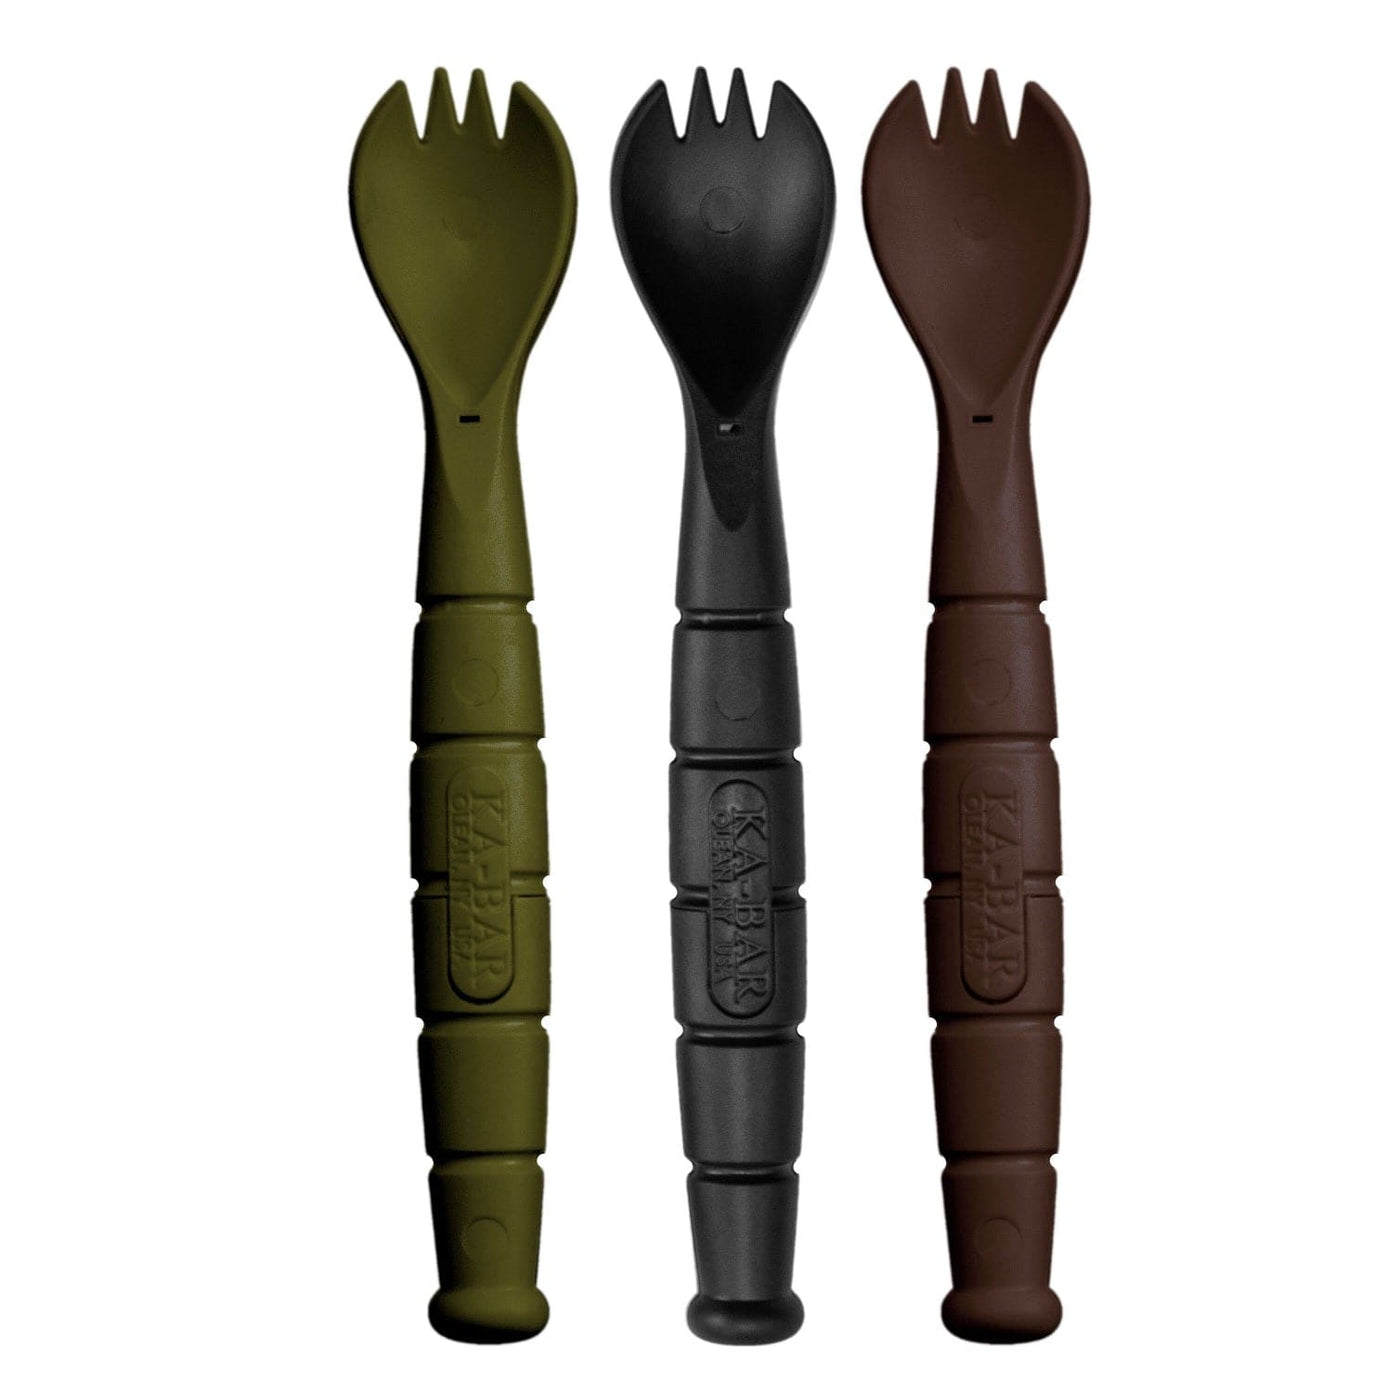 Ka-Bar Knives KA-BAR Tactical Spork (Spoon Fork Knife) Field Kit 3 Pack Gifts And Novelty